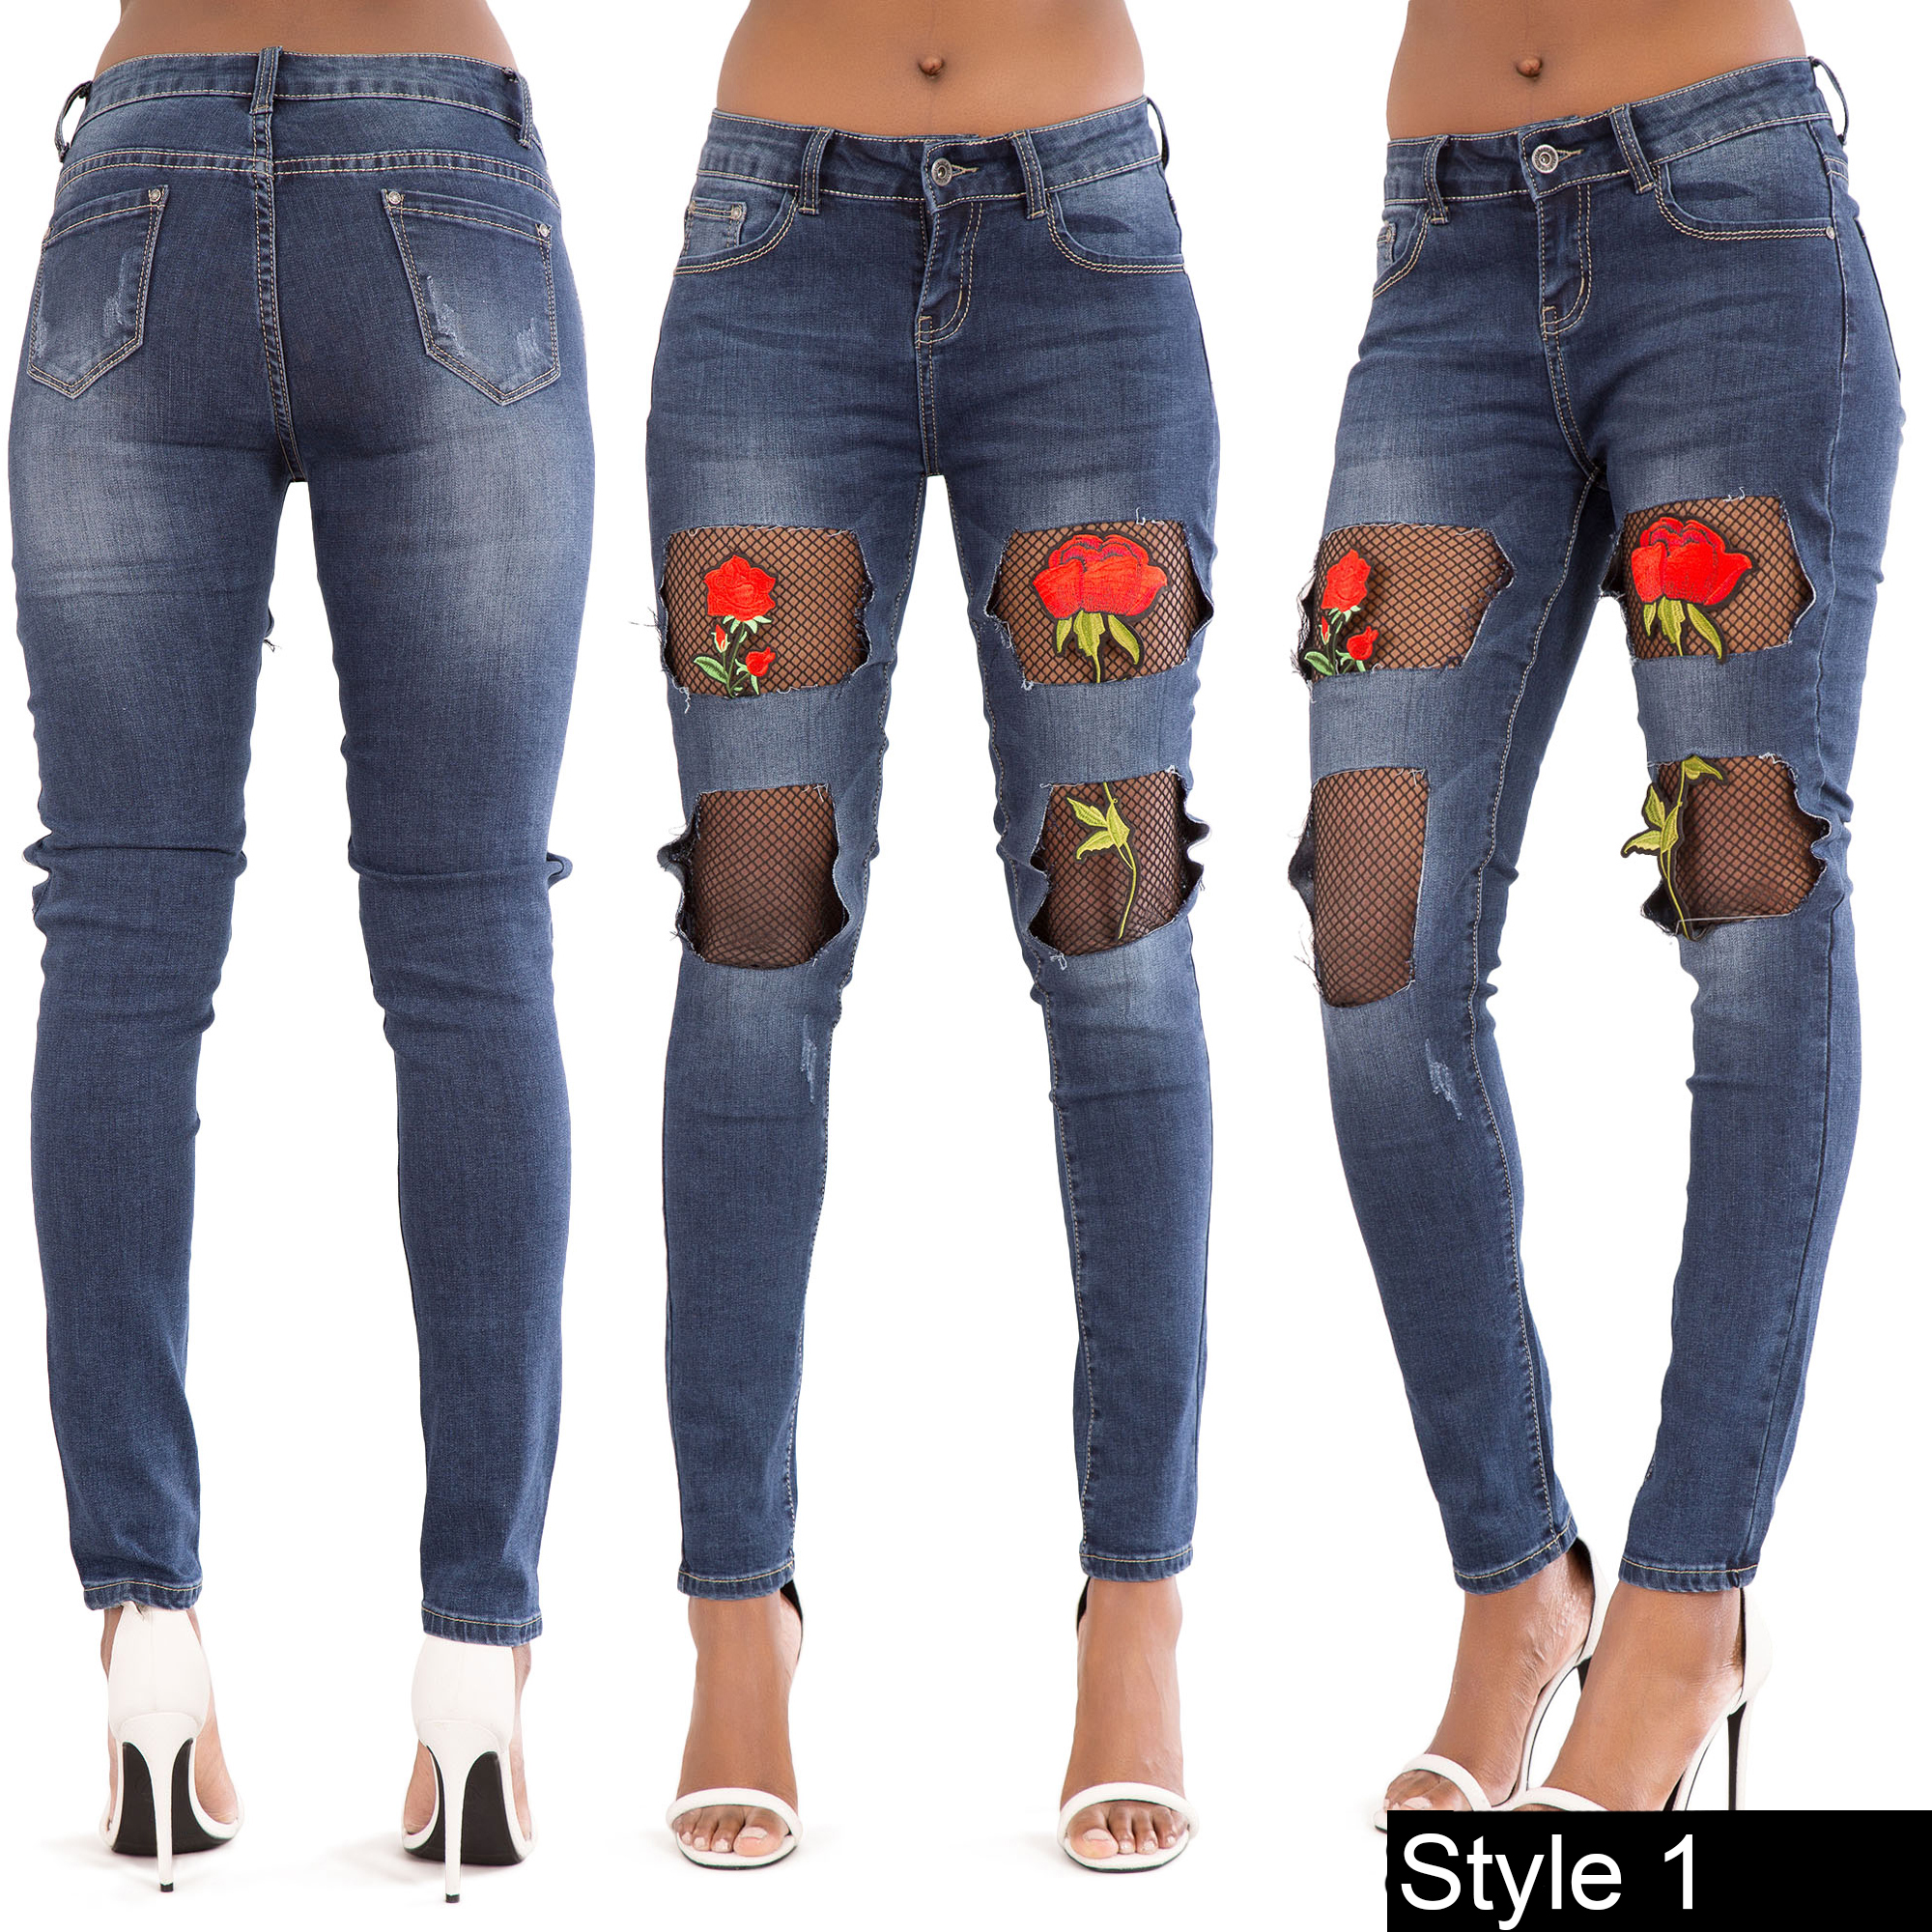 New Ladies Women Blue Black Ripped Skinny Jeans Slim Fit Stretch Denim Size 6 14 Ebay